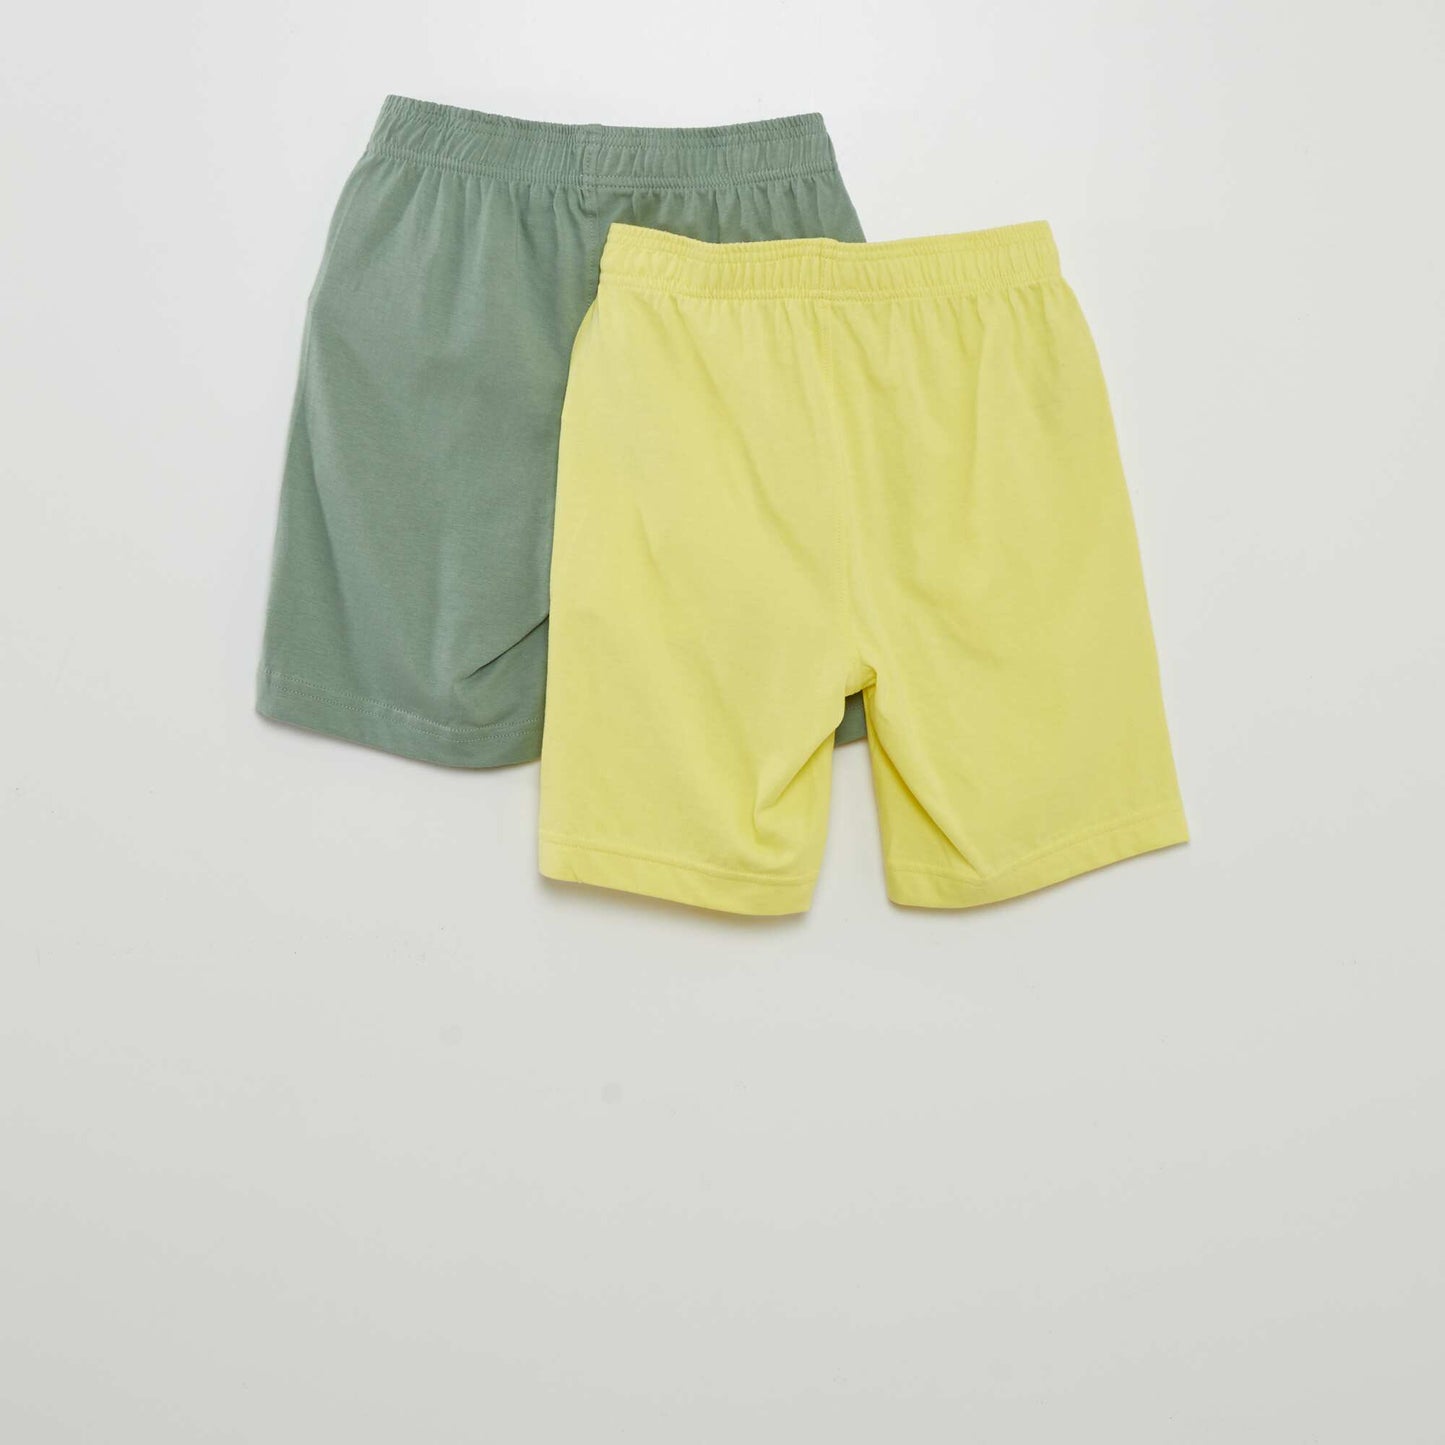 Pack of 2 plain shorts YELLOW